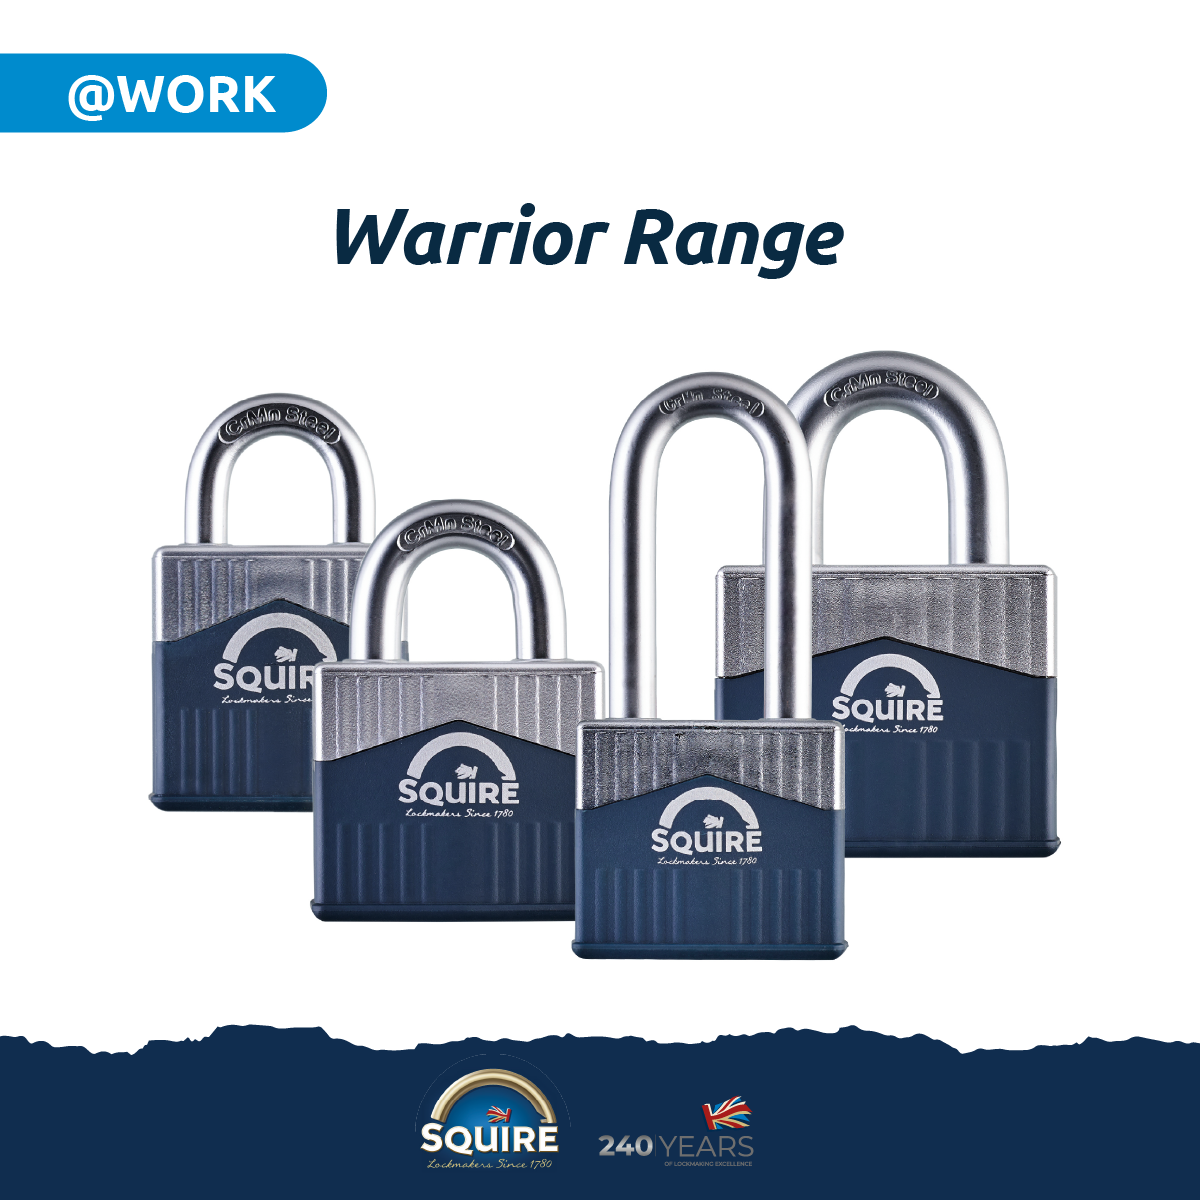 Warrior Key Range